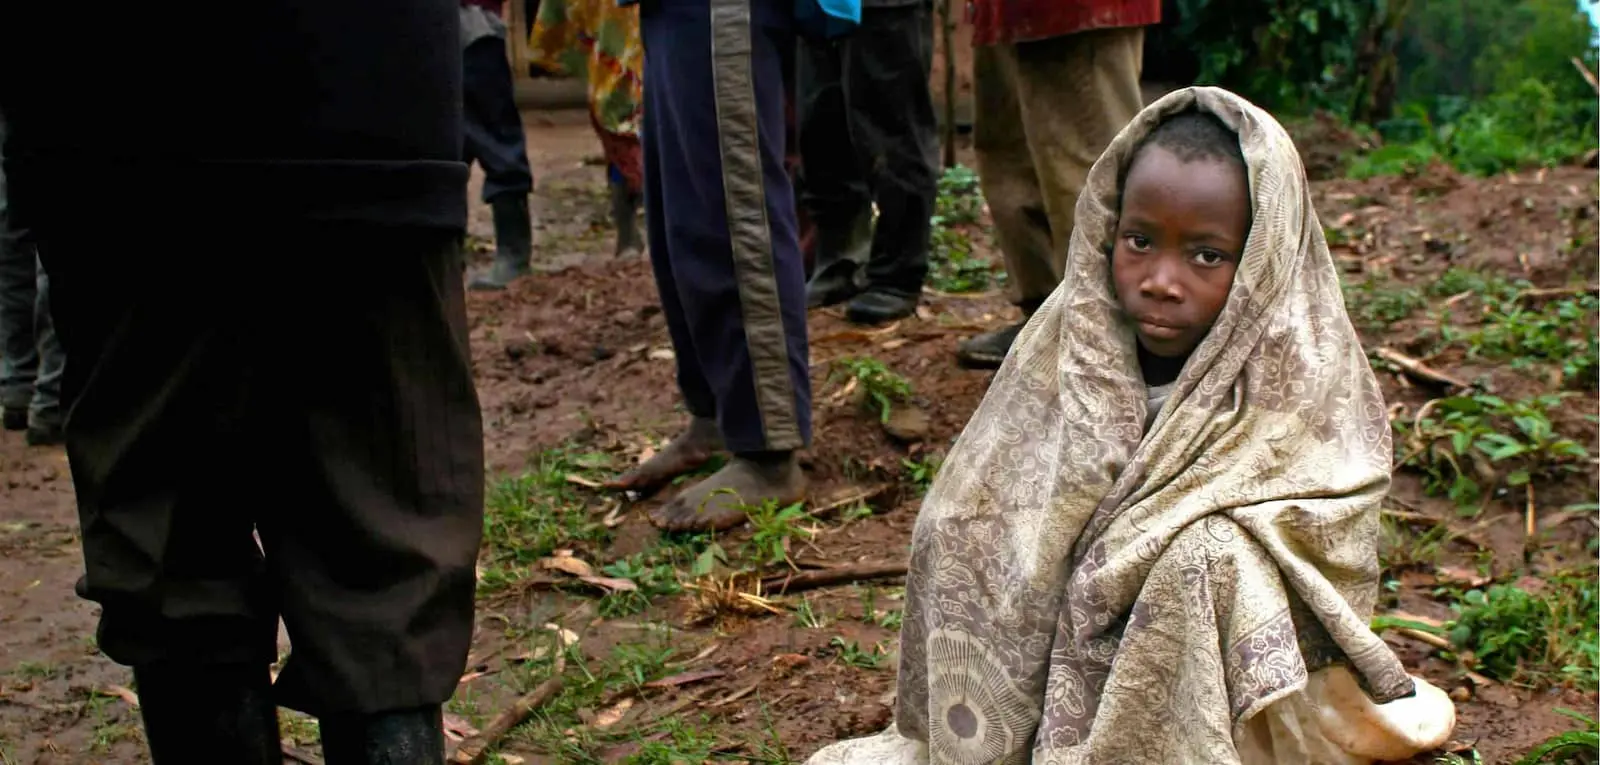 8 year old Rebecca Koko in the village of Shoa, near Masisi, Democratic Republic of Congo